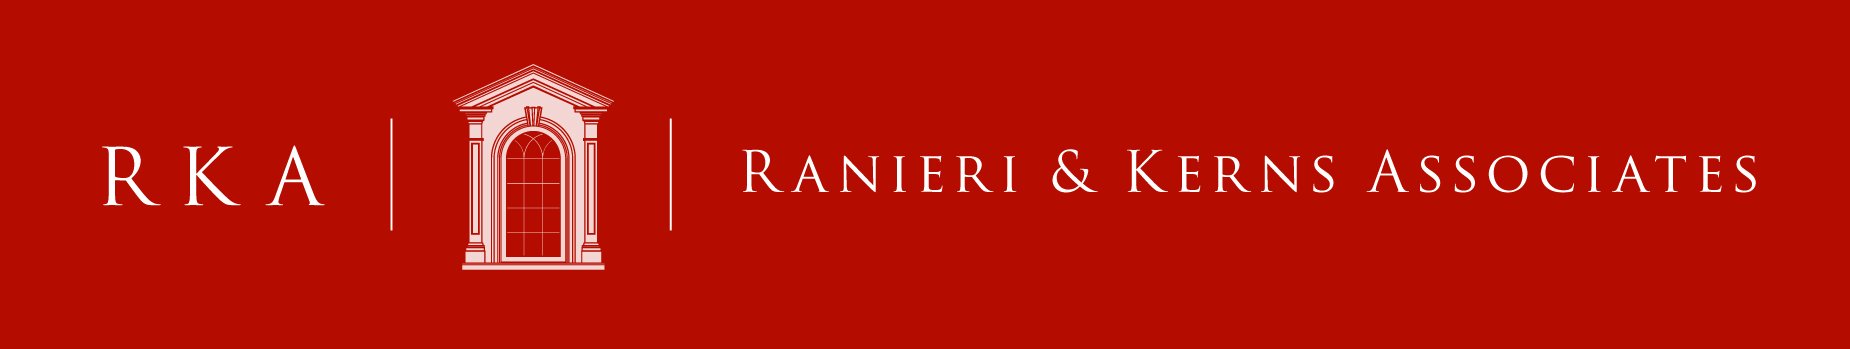 Ranieri & Kerns Associates